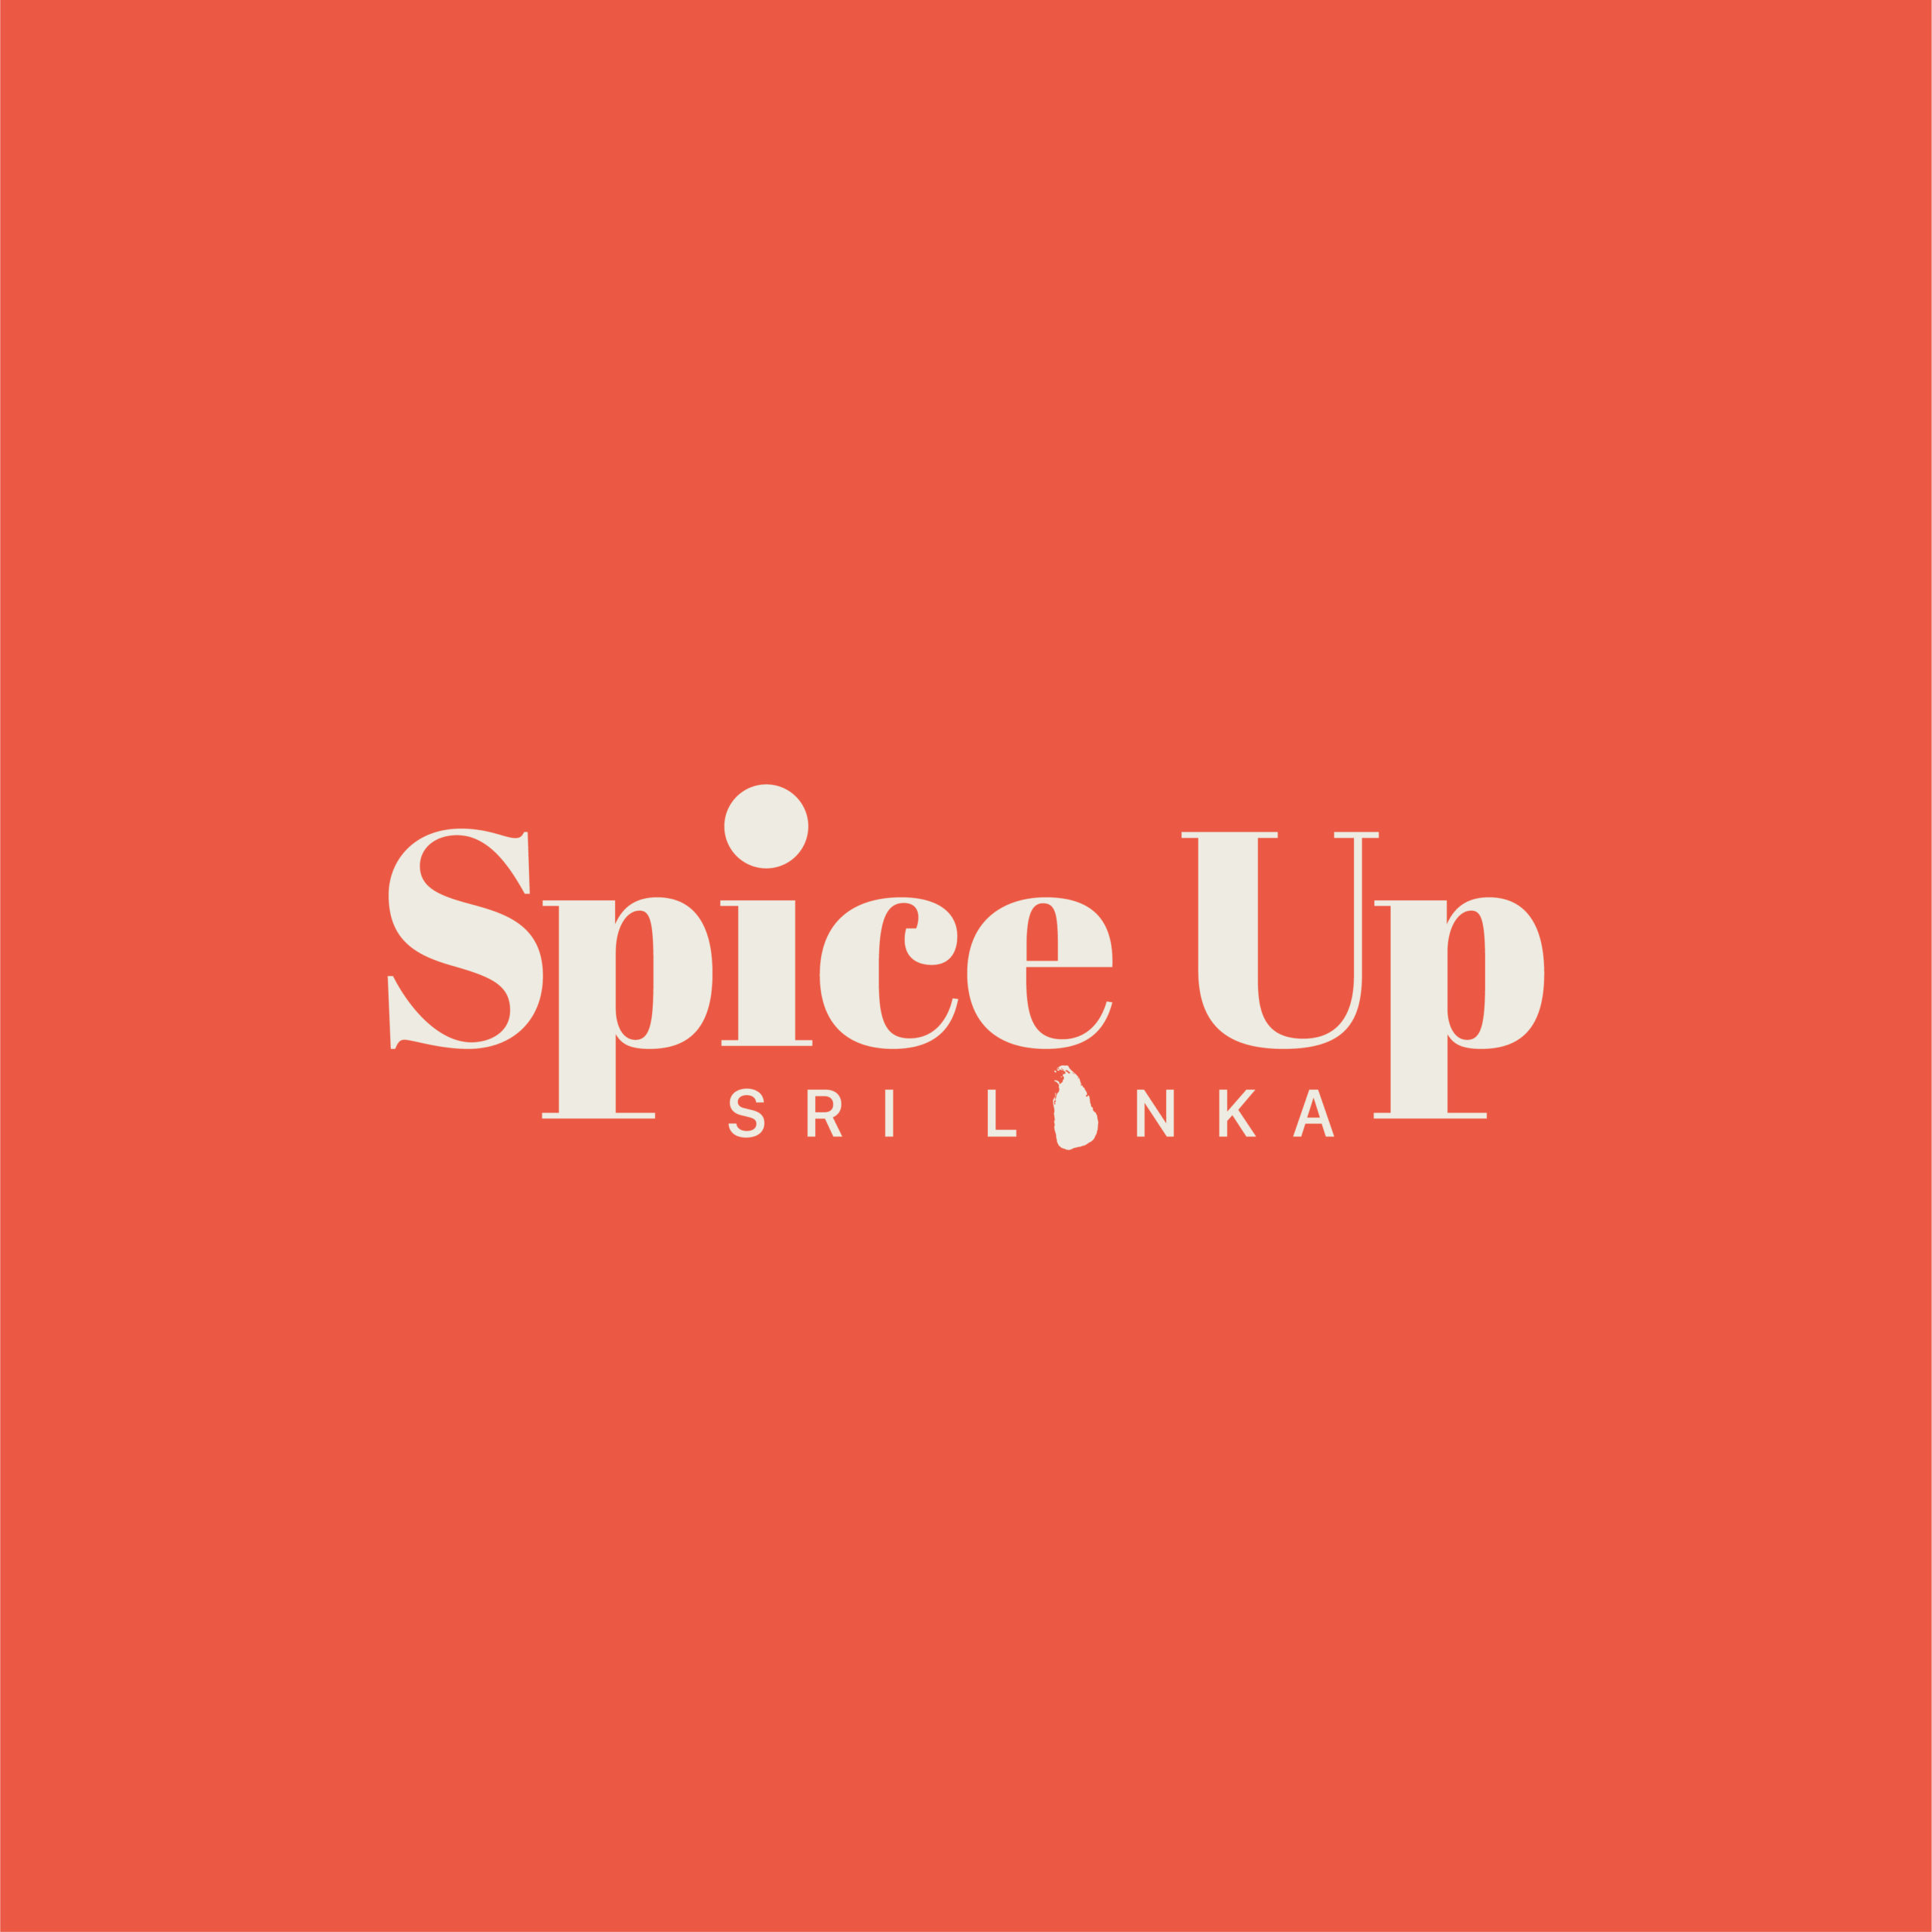 Spice Up Lanka Corporation (PVT) LTD : Brand Short Description Type Here.